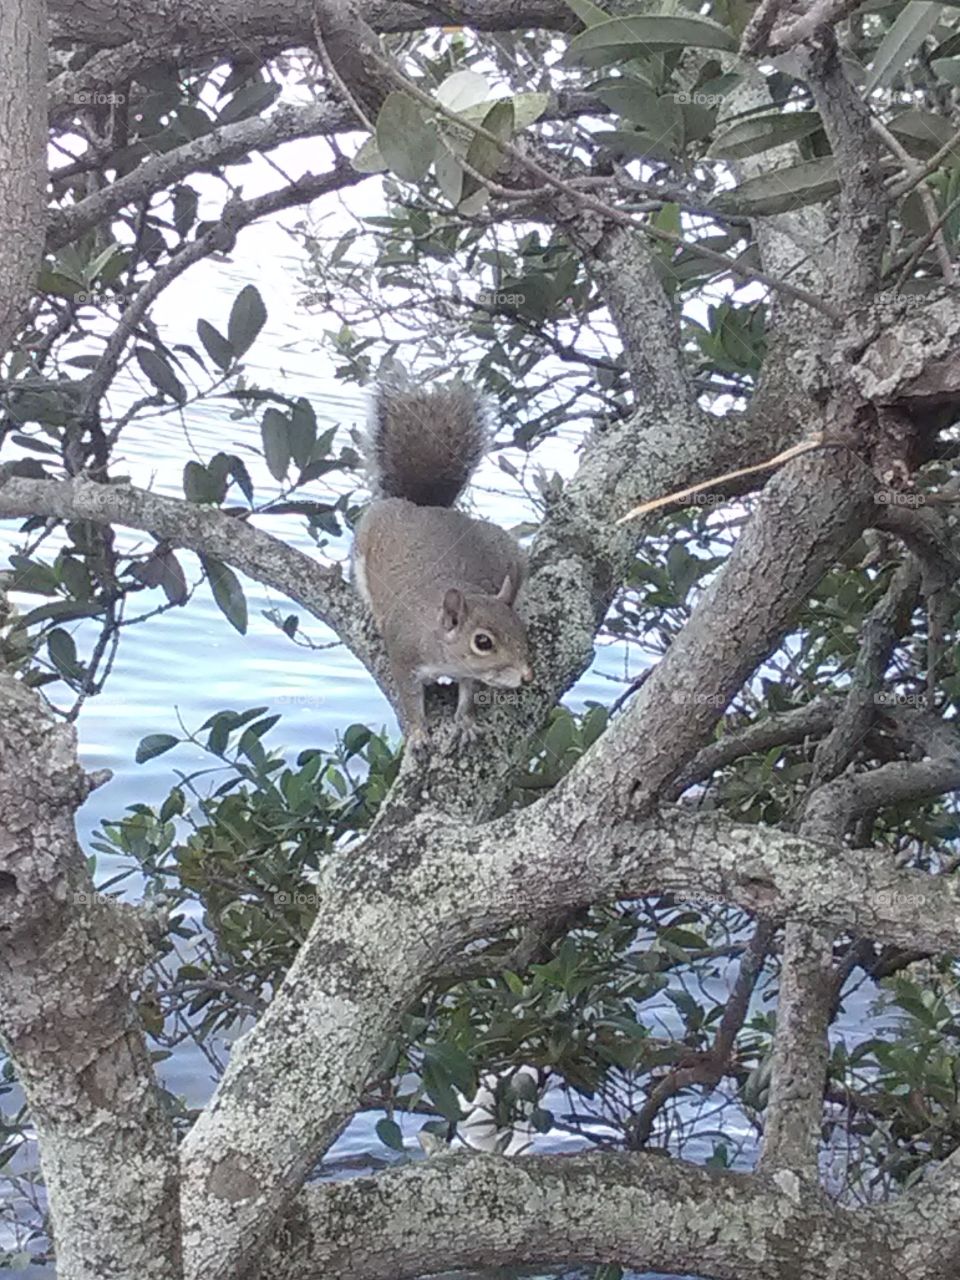 Squirrel  at Ballast Point Park in Tampa FL